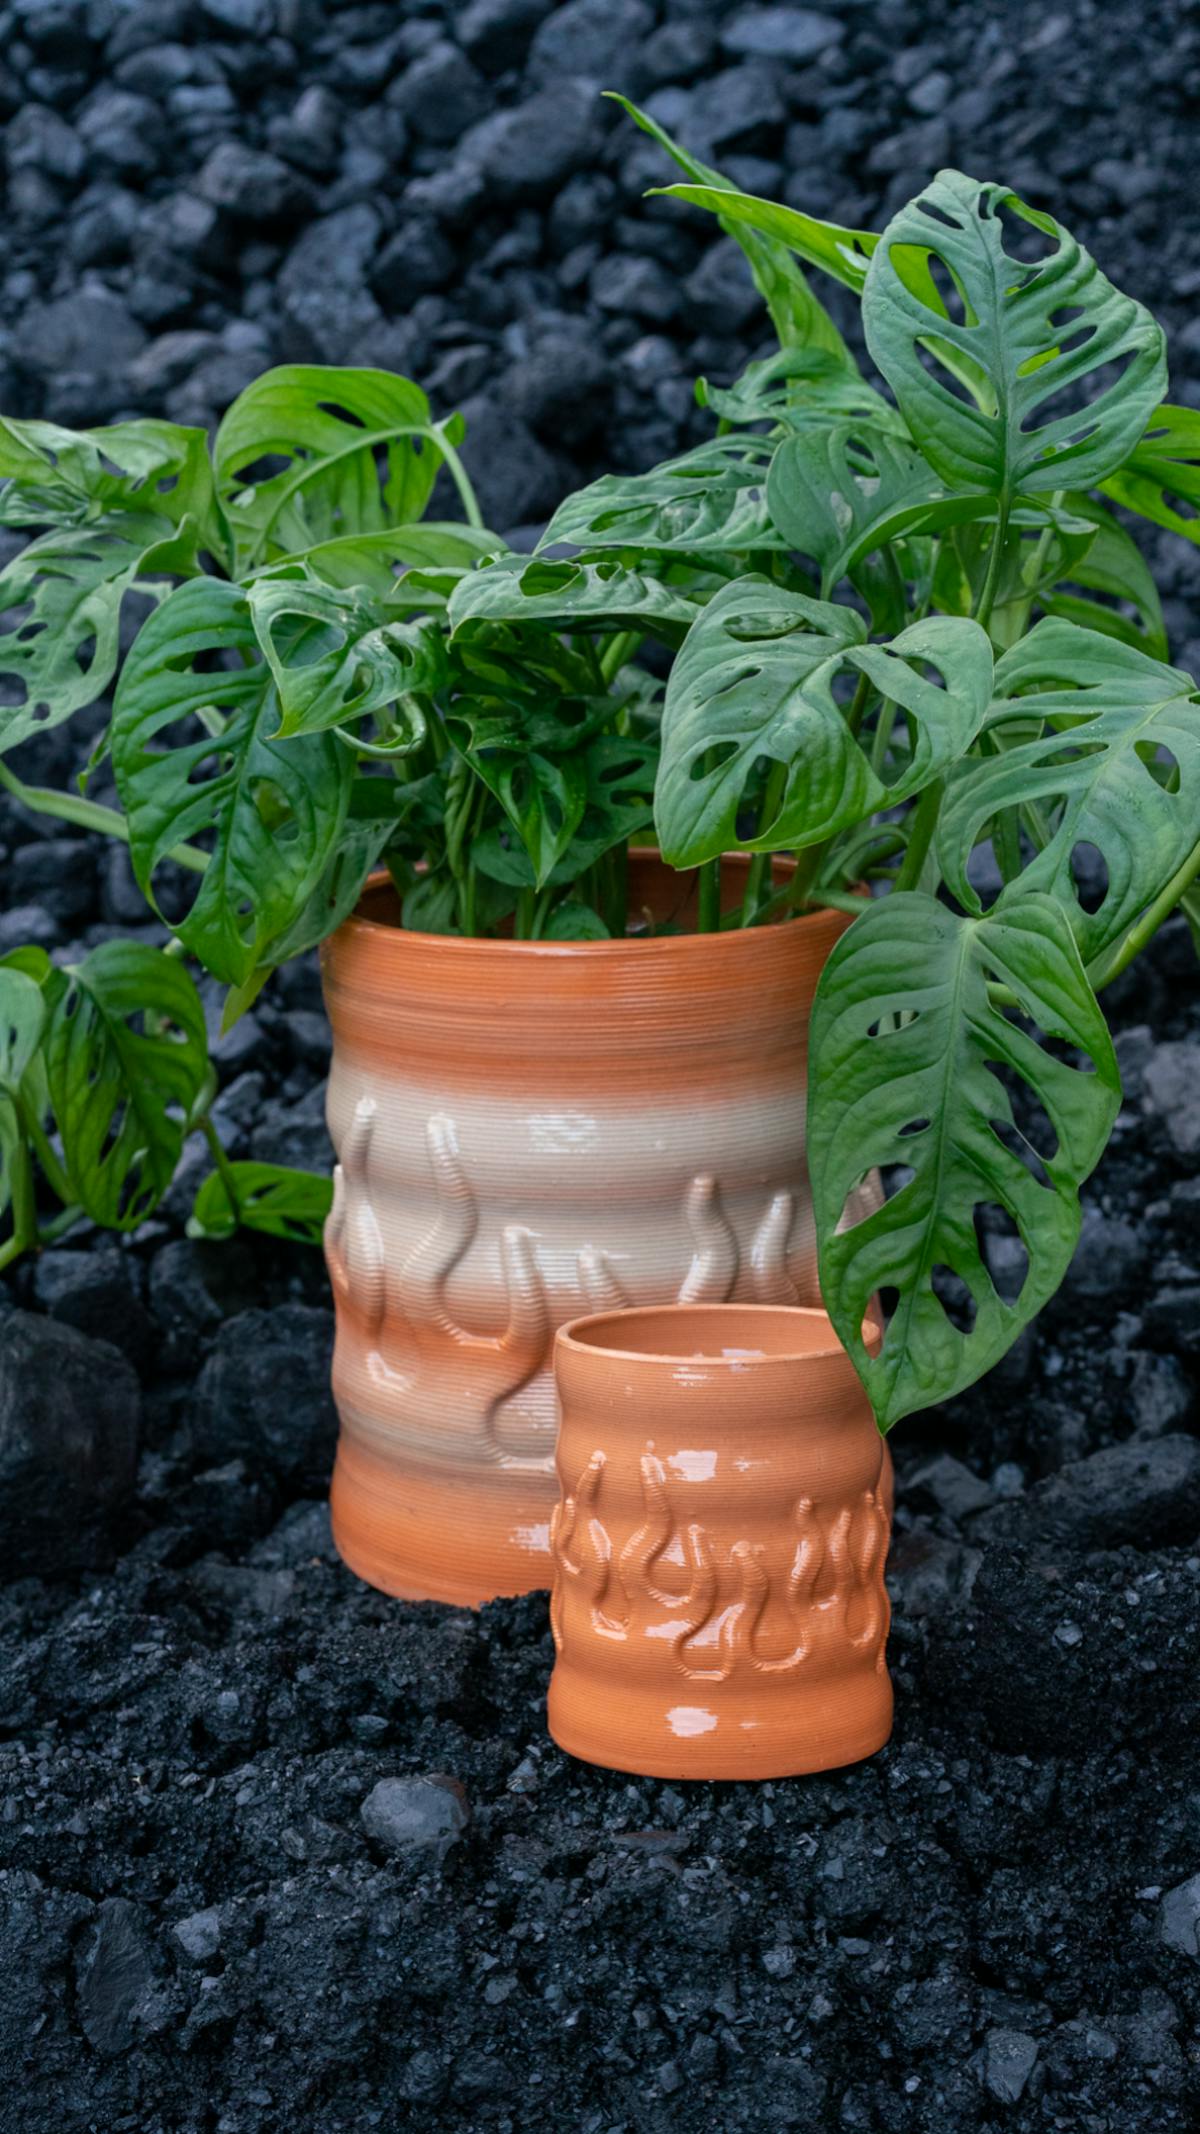 3d printed ceramic vase with indoor plant